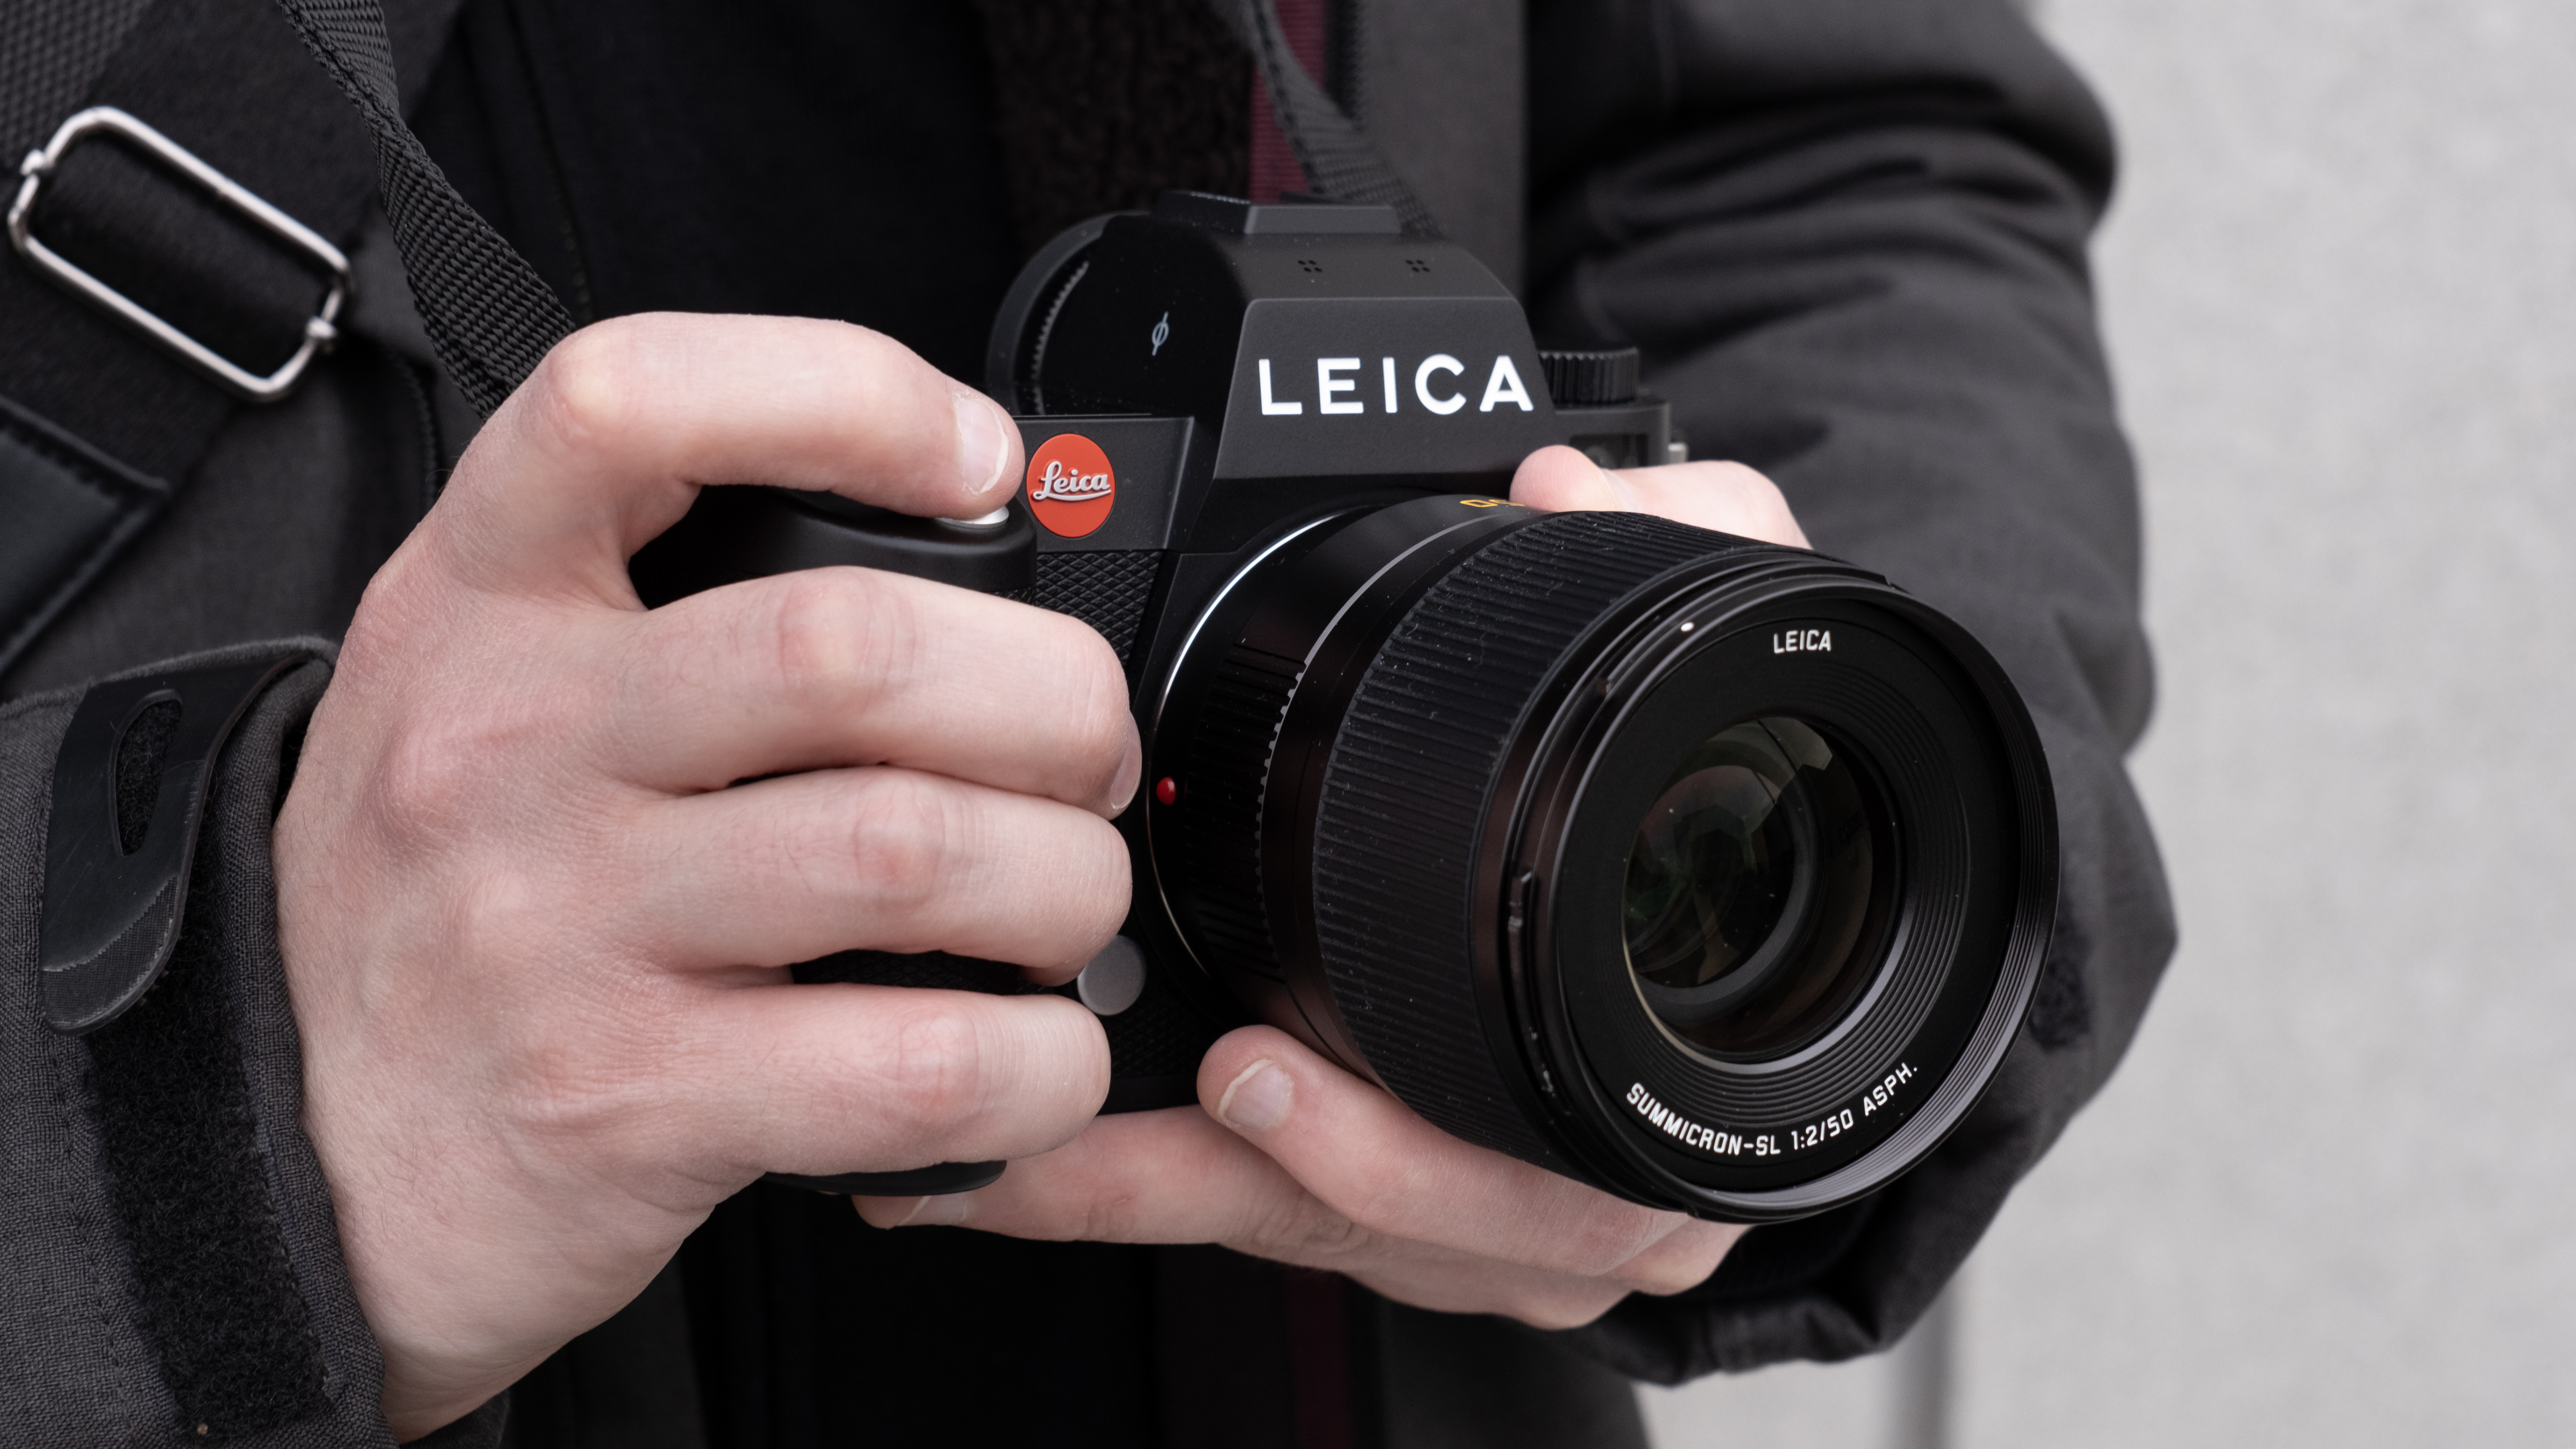 Hands holding the Leica SL3 camera